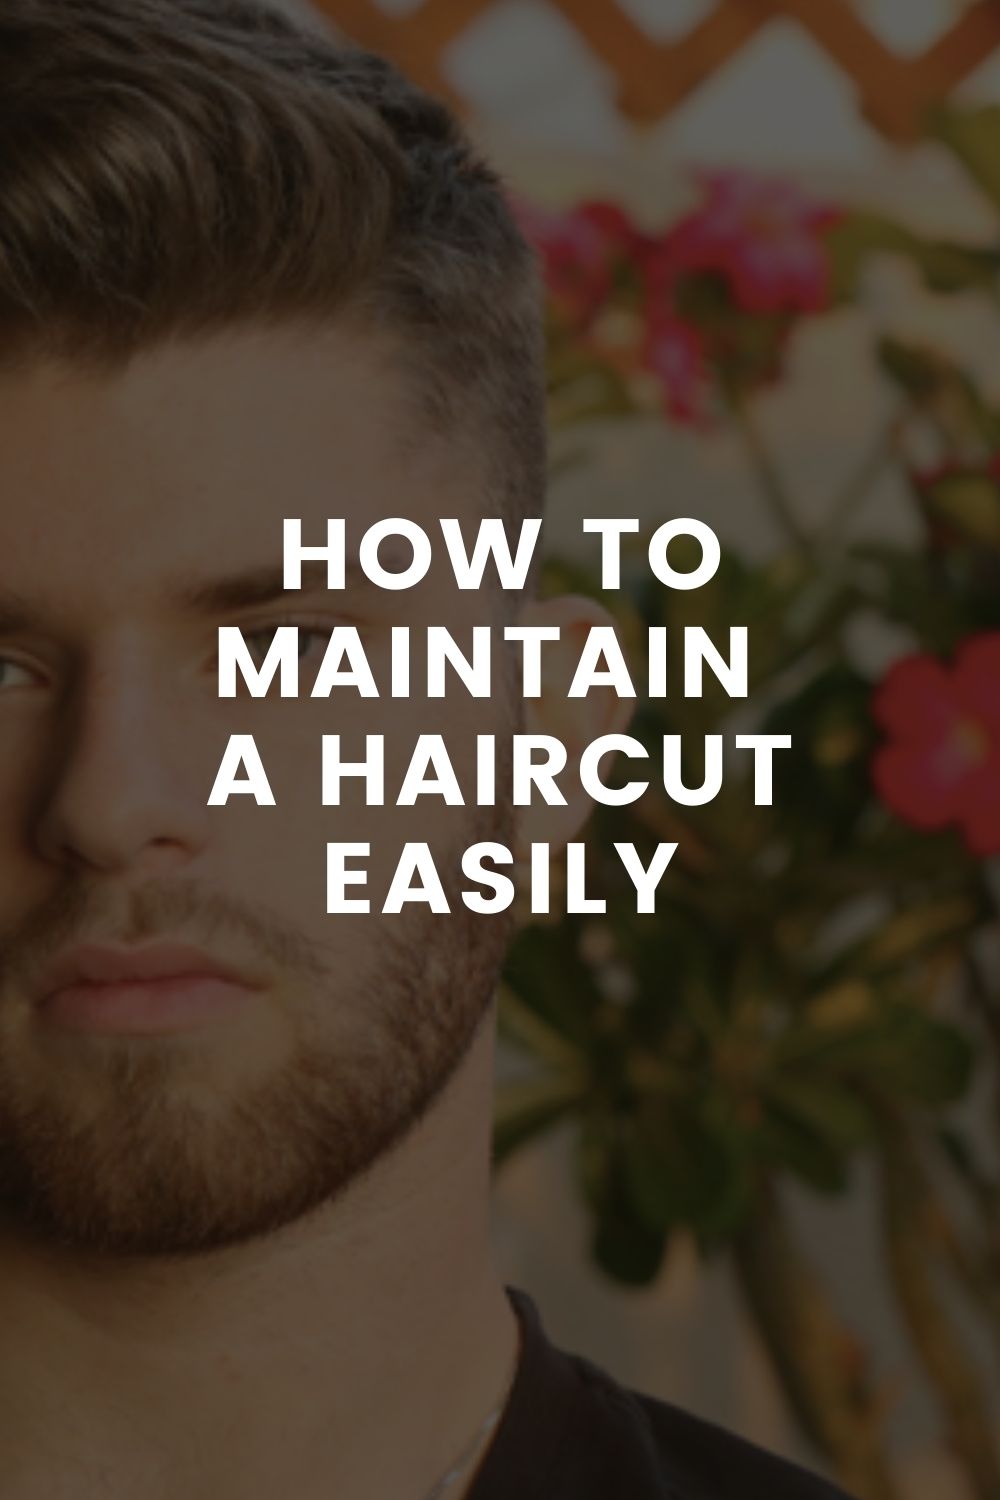 HOW TO MAINTAIN  A HAIRCUT EASILY